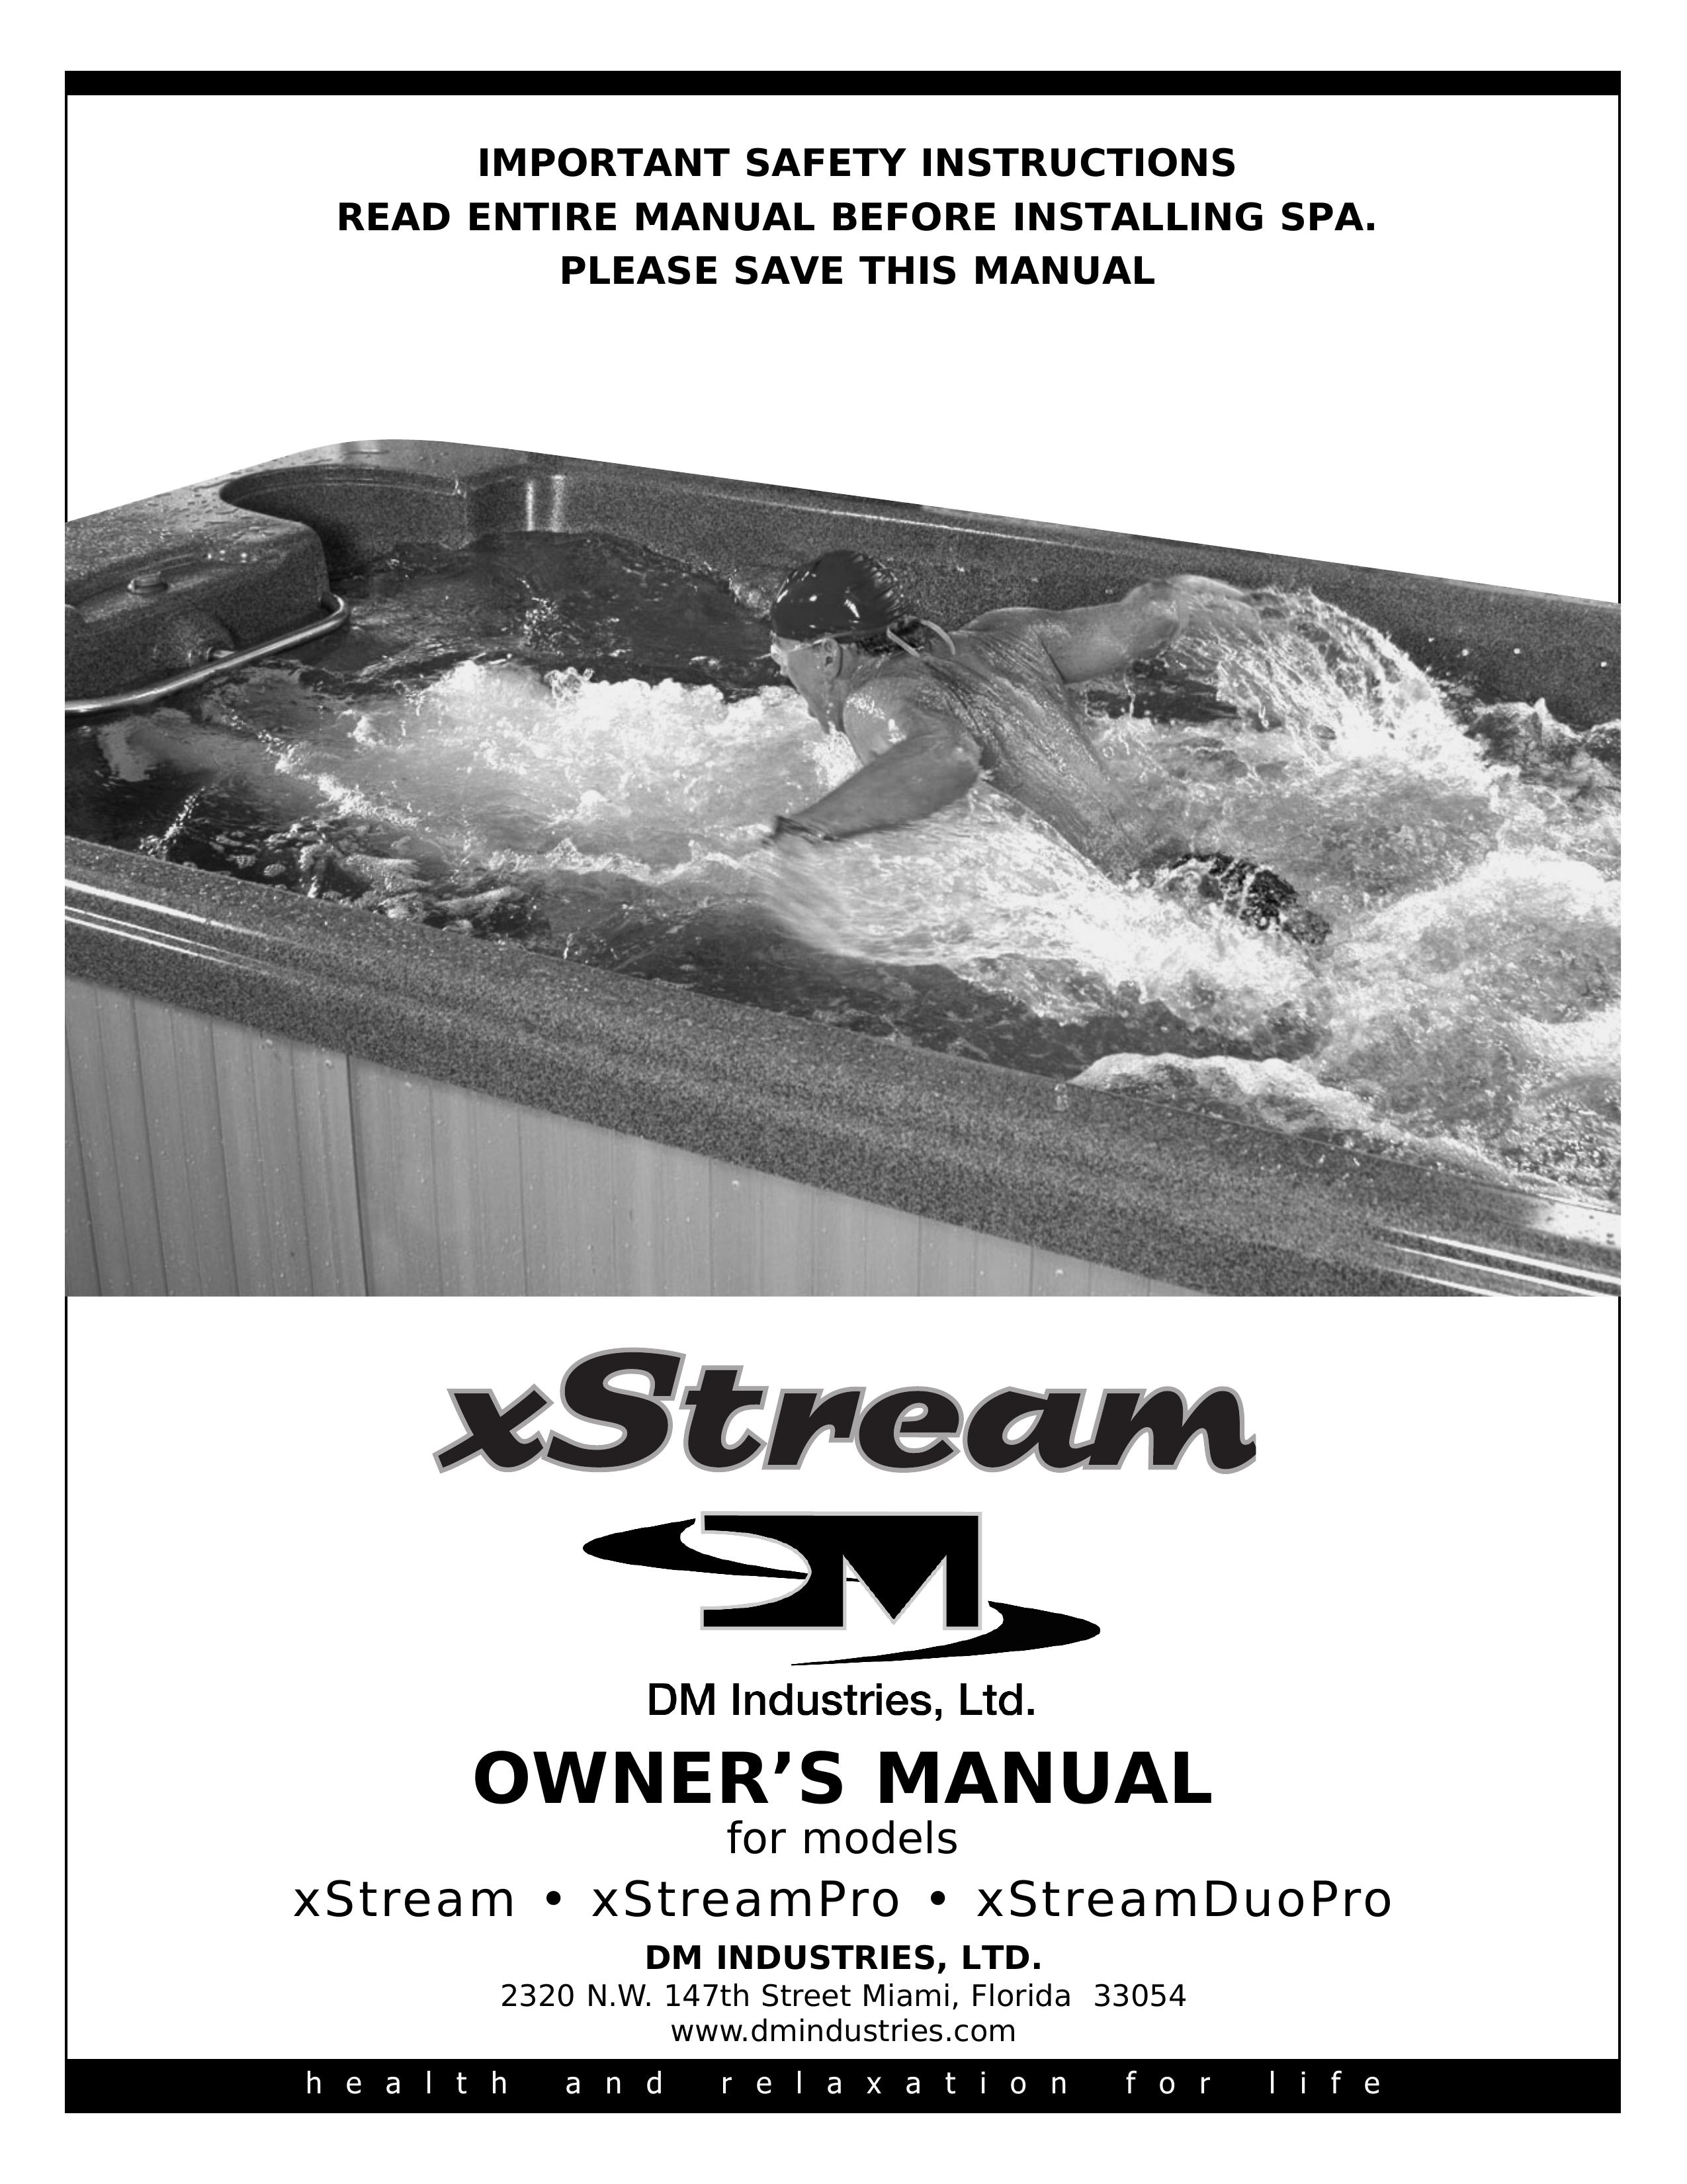 Vita Spa xStreamPro Hot Tub User Manual